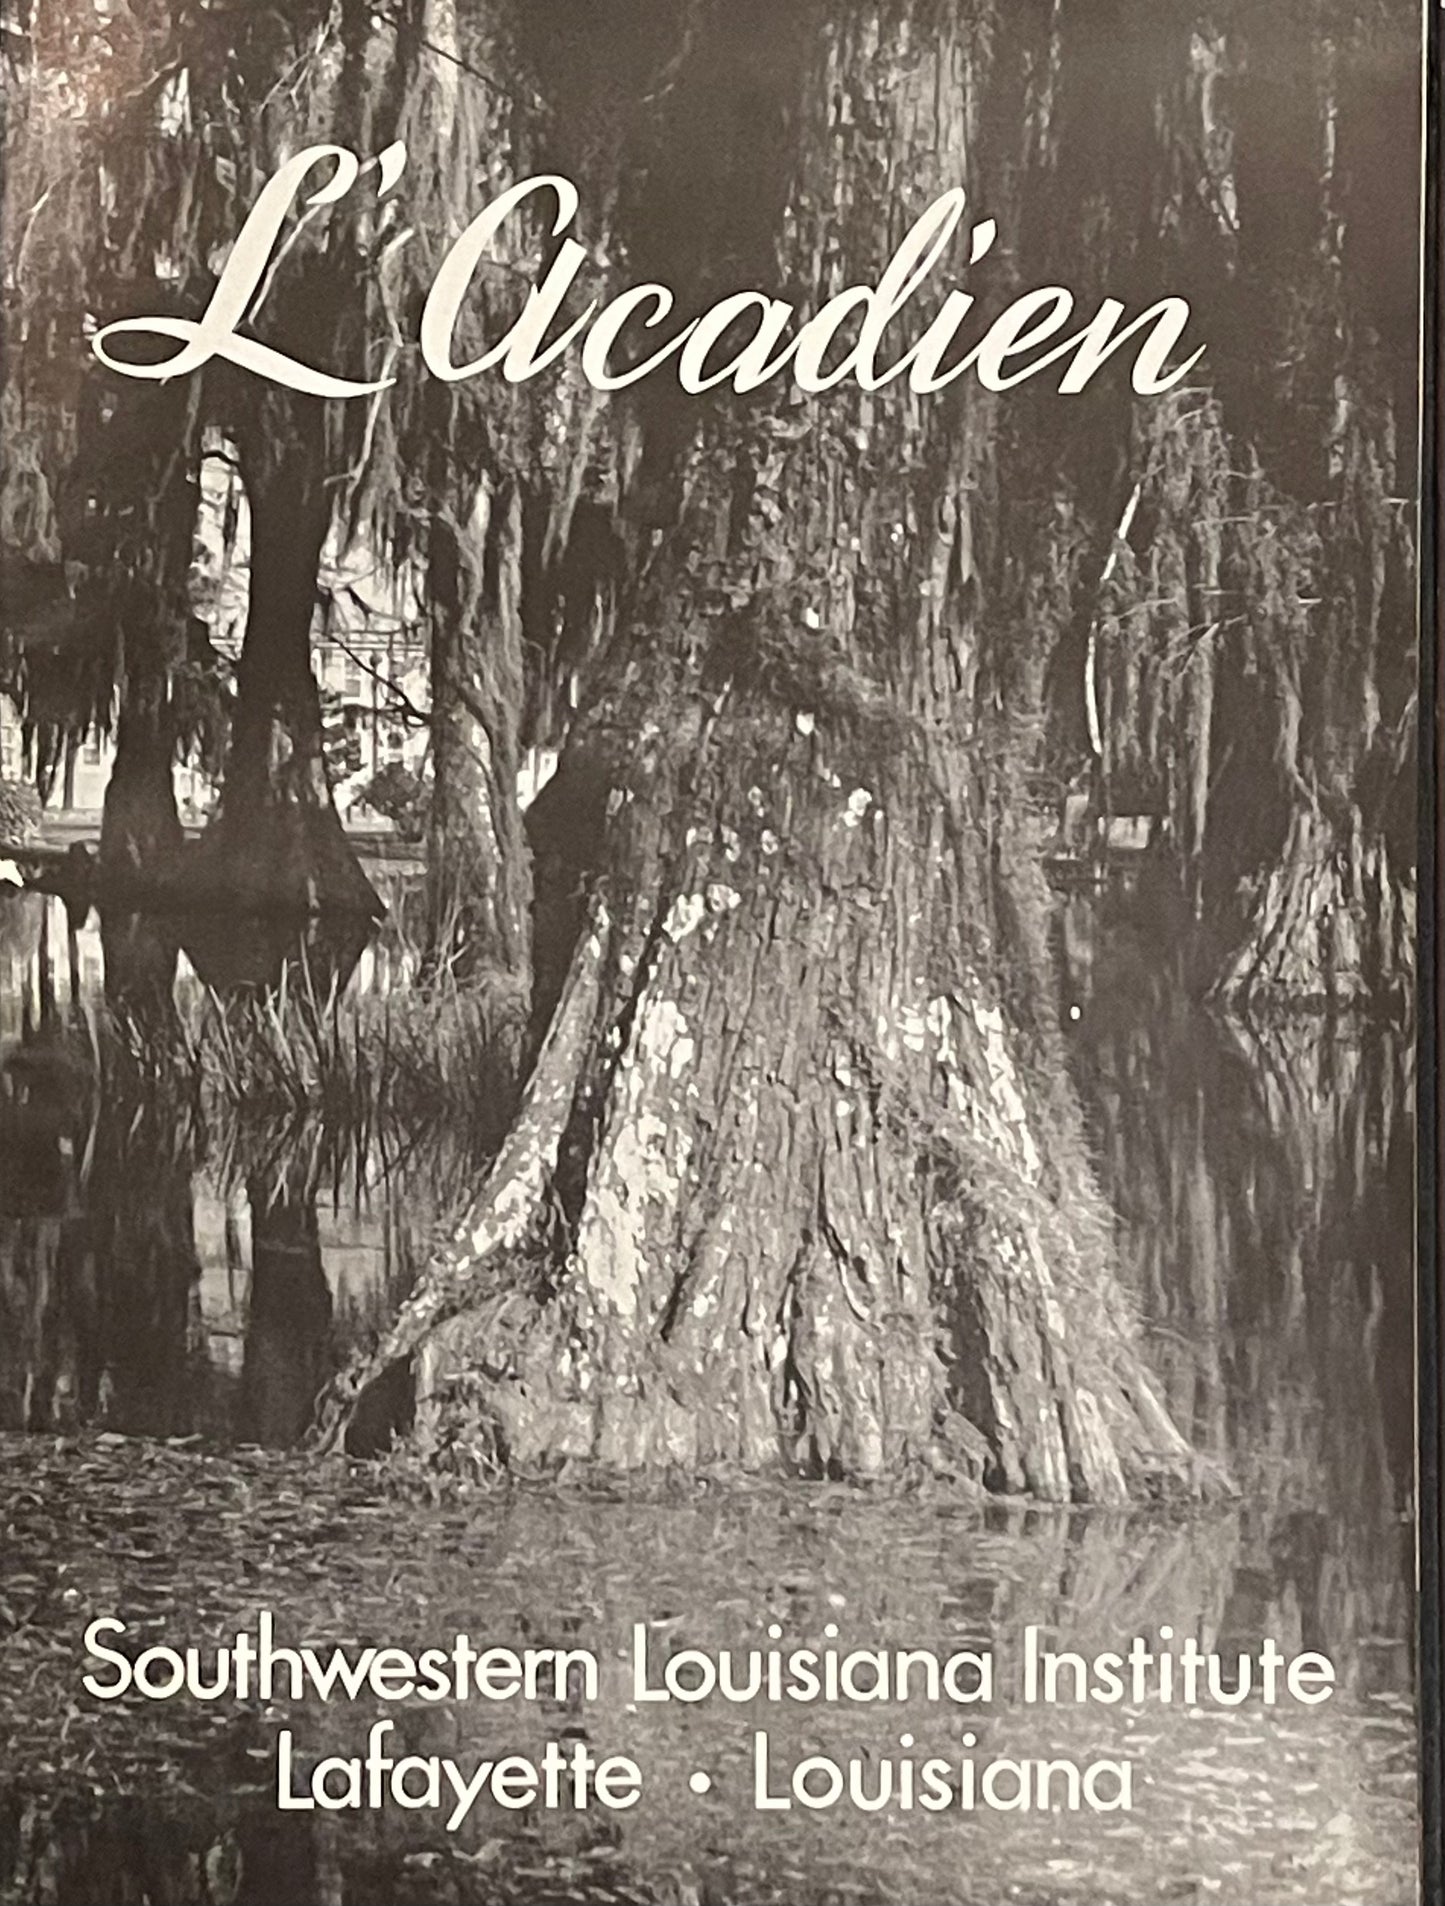 1953 L'Acadien Southwestern Louisiana Institute in Lafayette, Louisiana Yearbook